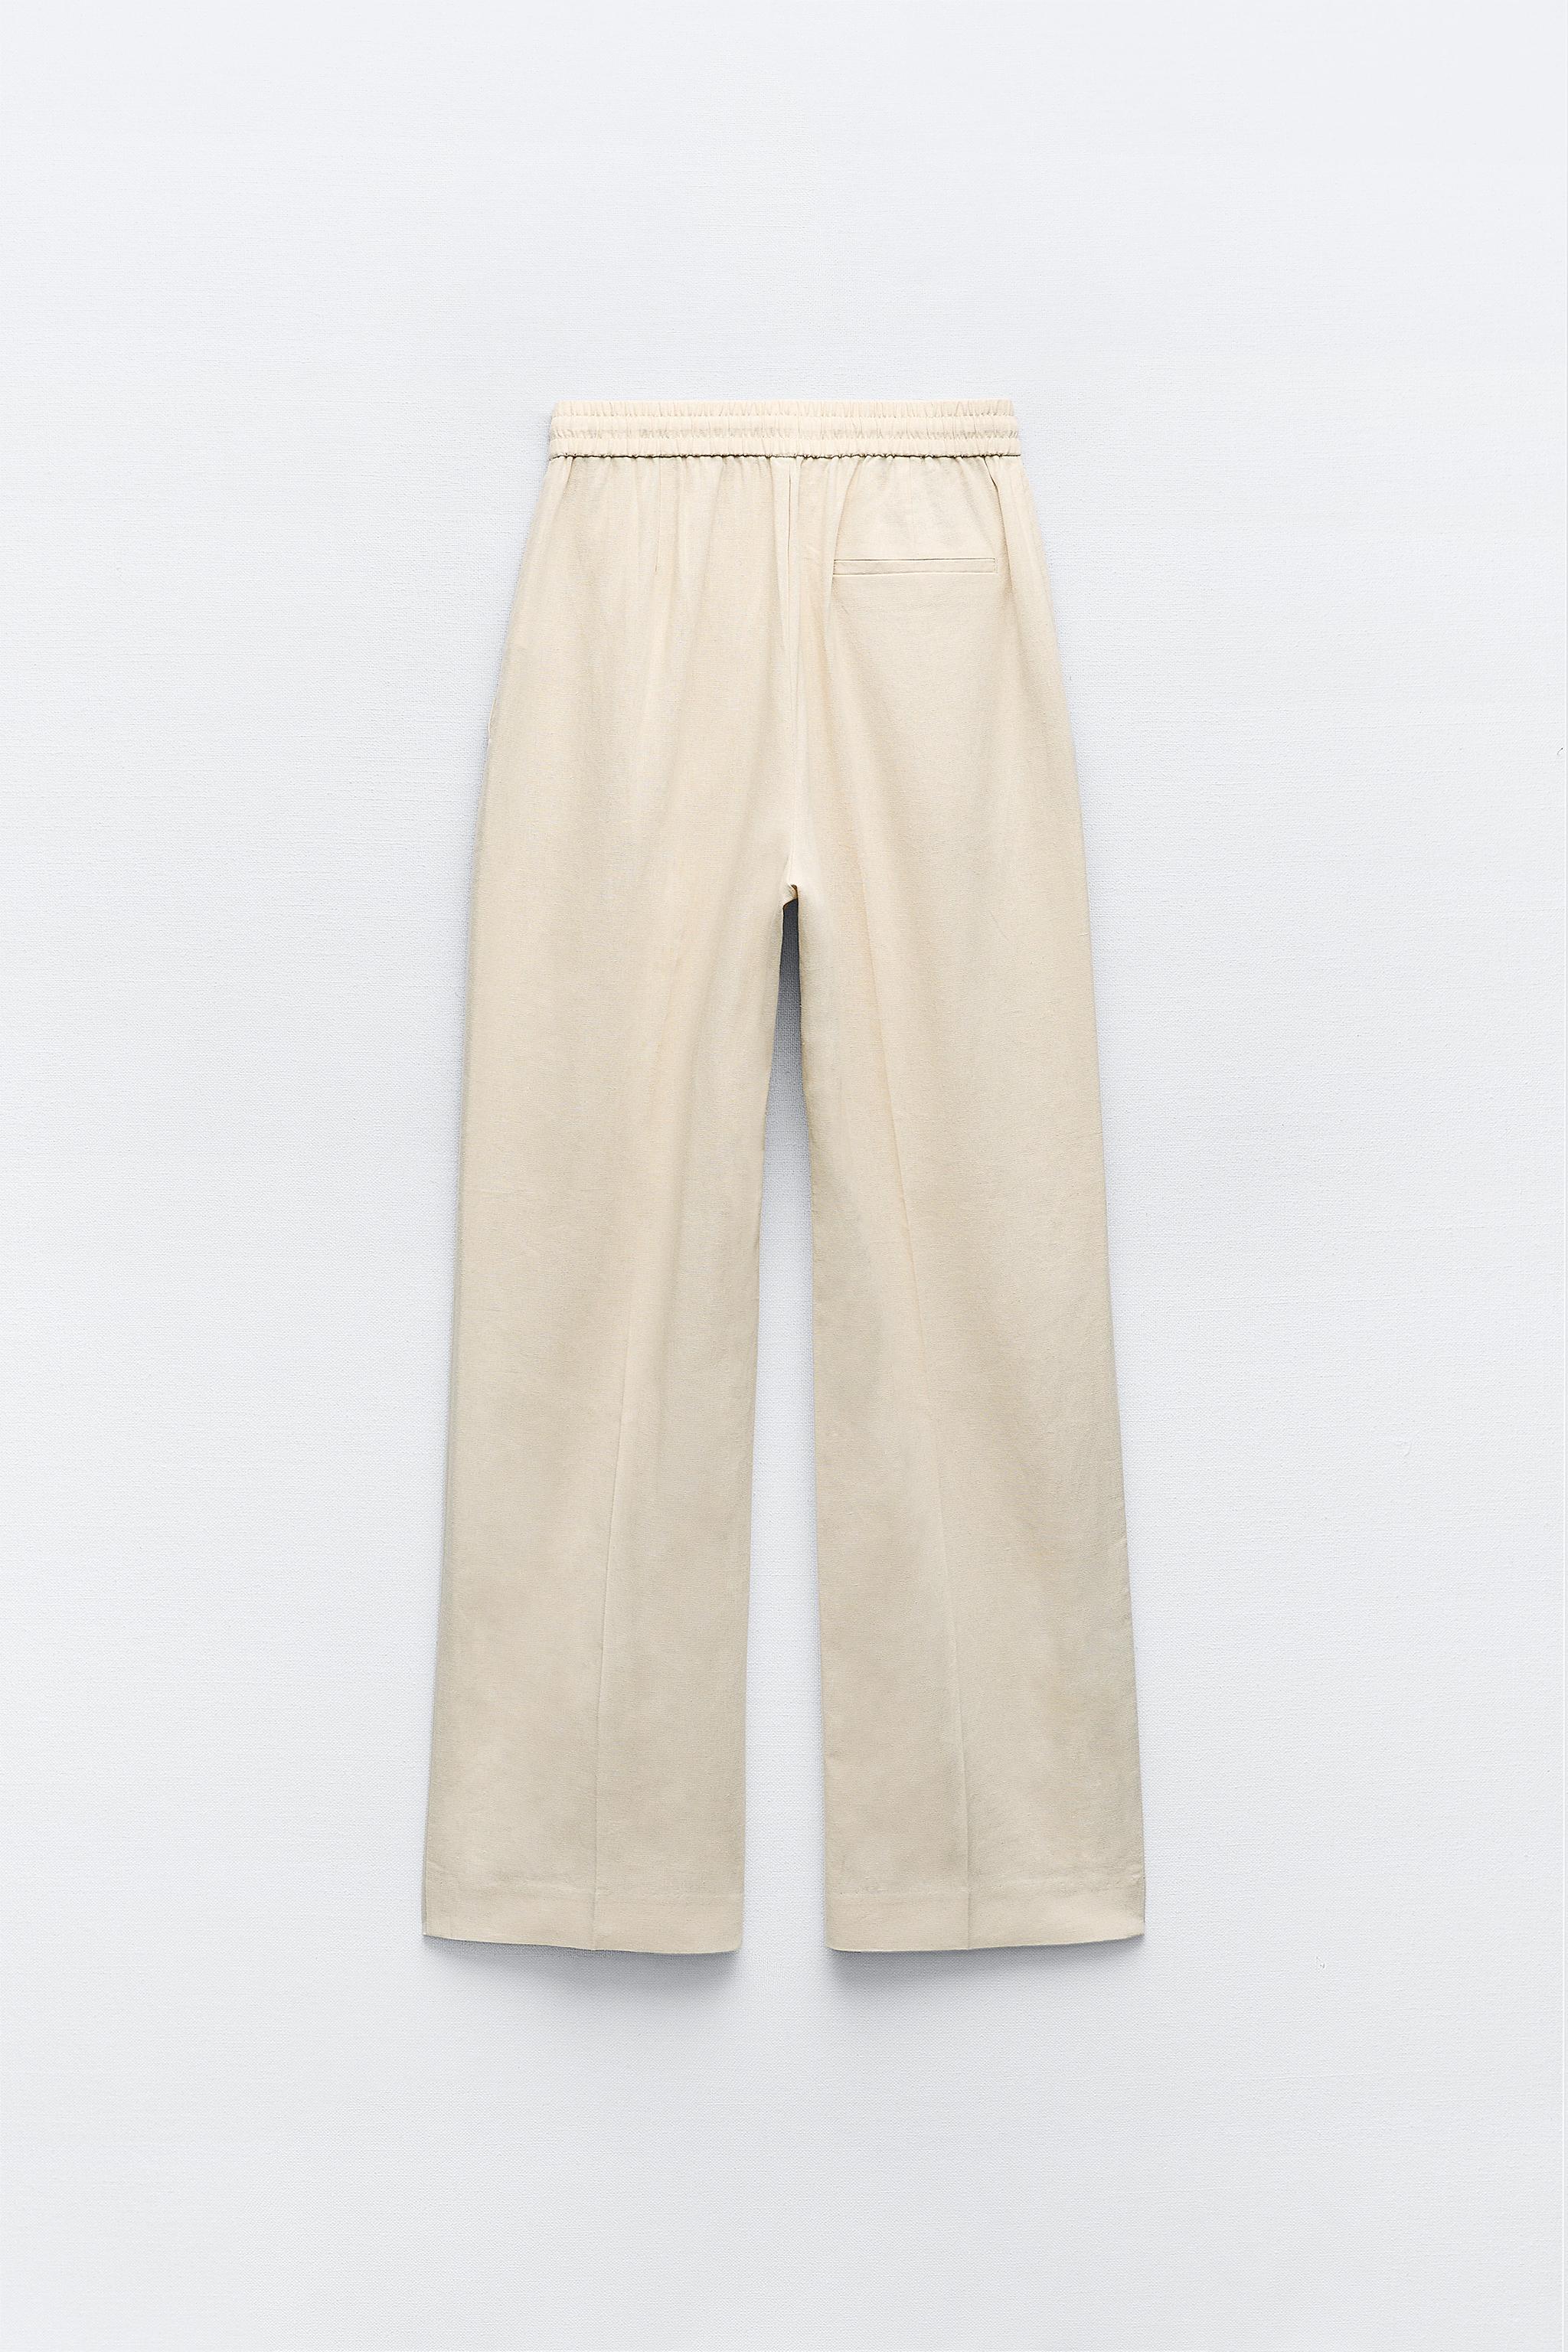 Zara, Pants & Jumpsuits, Zara Pants Retro Ikat Floral Bold Print Trouser  Pants Wide Leg Linen Size Large